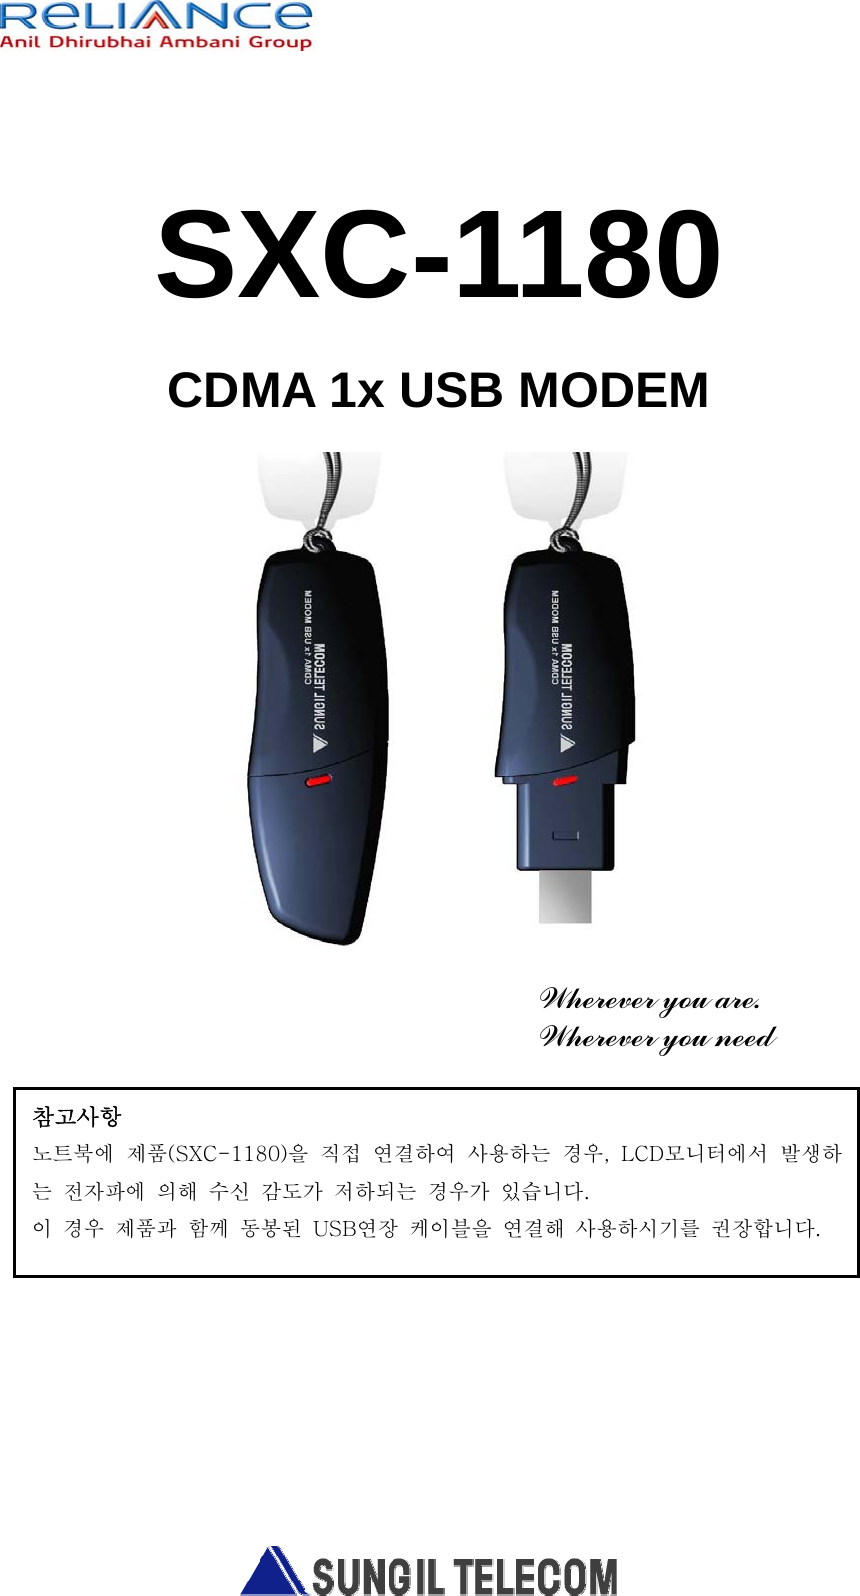    SXC-1180 CDMA 1x USB MODEM        Wherever you are. Wherever you need        참고사항 노트북에  제품(SXC-1180)을  직접  연결하여  사용하는  경우,  LCD모니터에서  발생하는  전자파에  의해  수신  감도가  저하되는  경우가  있습니다. 이  경우  제품과  함께  동봉된  USB연장  케이블을  연결해  사용하시기를  권장합니다. 